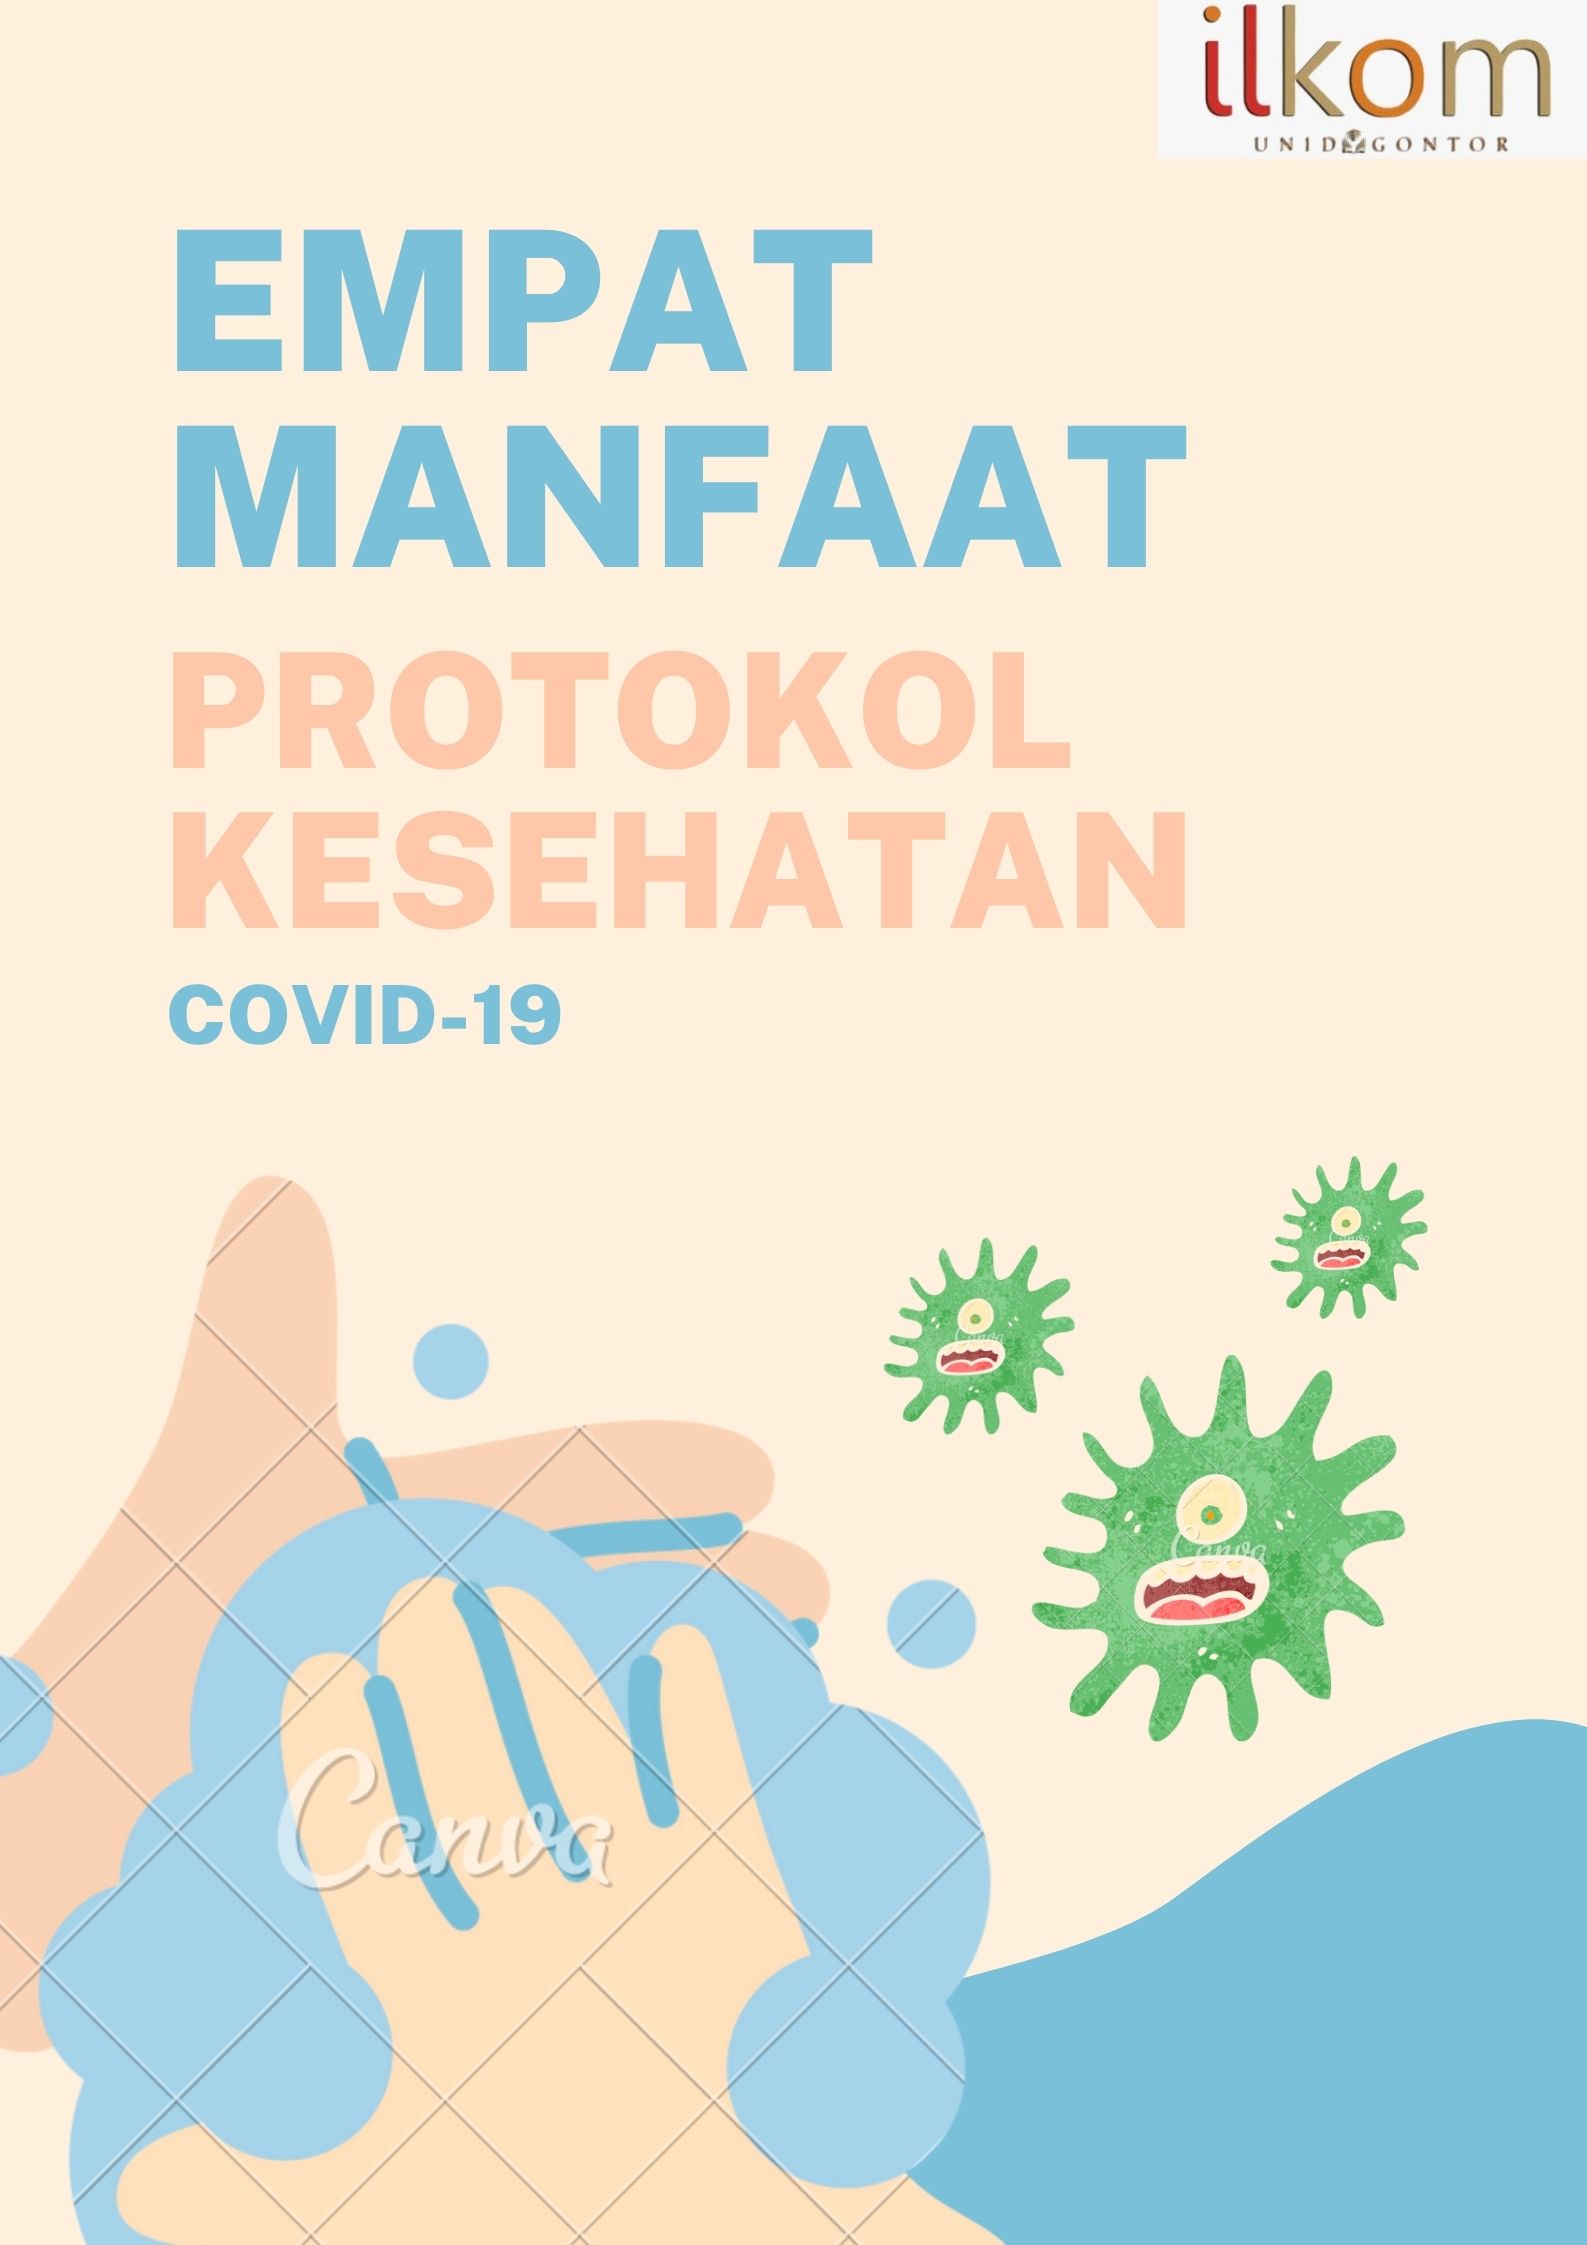 Poster 5m protokol kesehatan